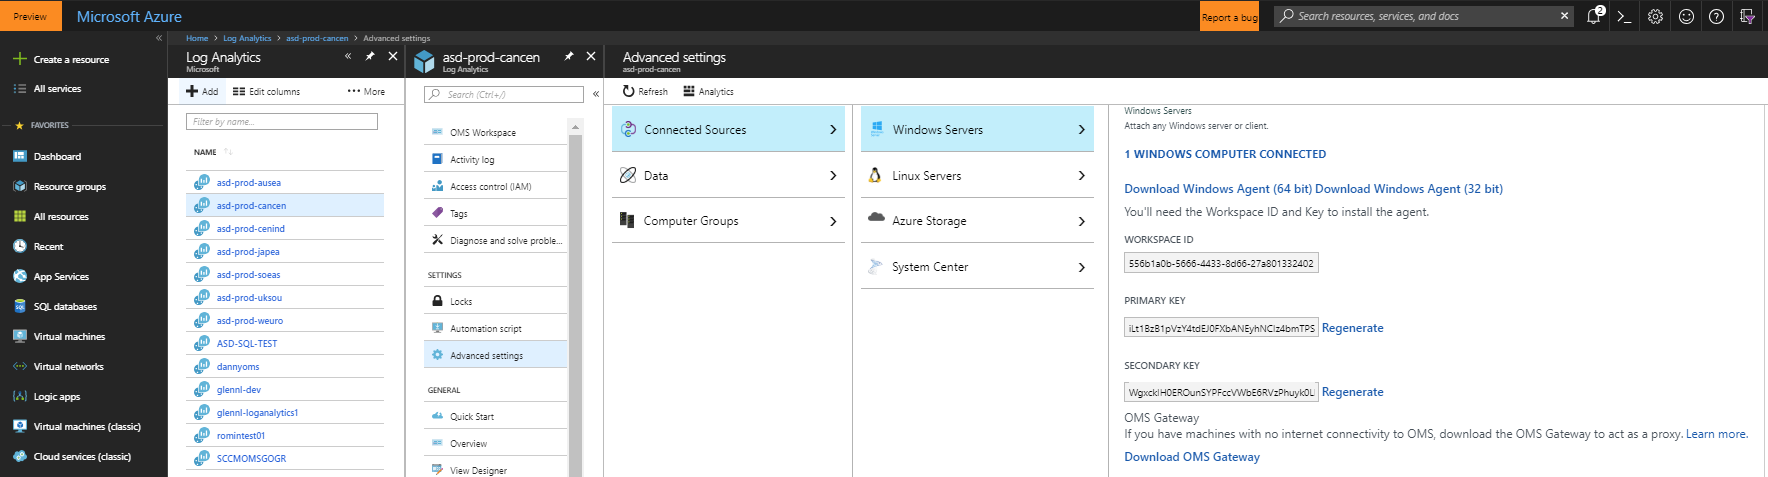 Microsoft Azure 窗口，其中显示了已选择“连接源”和“Windows Server”菜单项。